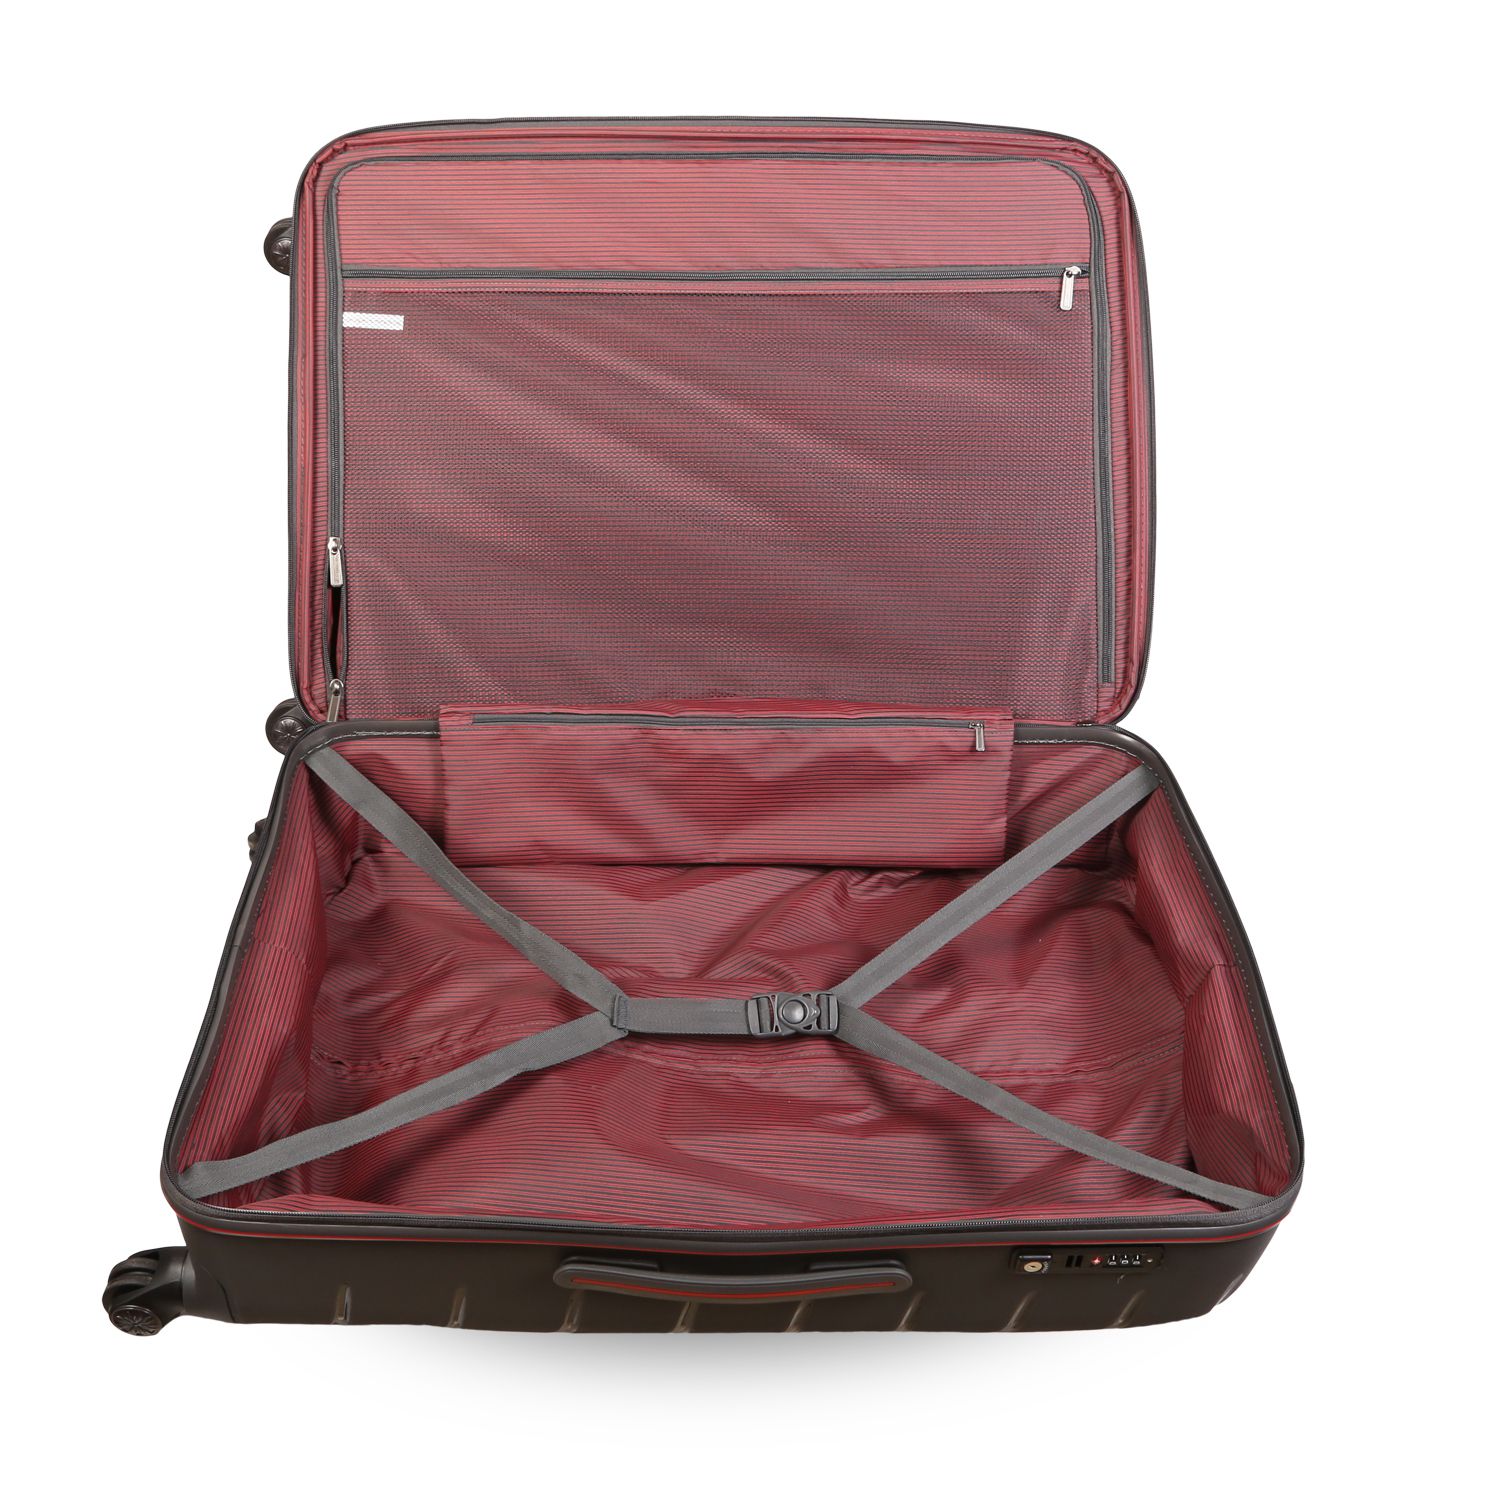 Fly Grey S (Below 60cm) Cabin Hard Luggage - Buy Fly Grey S (Below 60cm ...